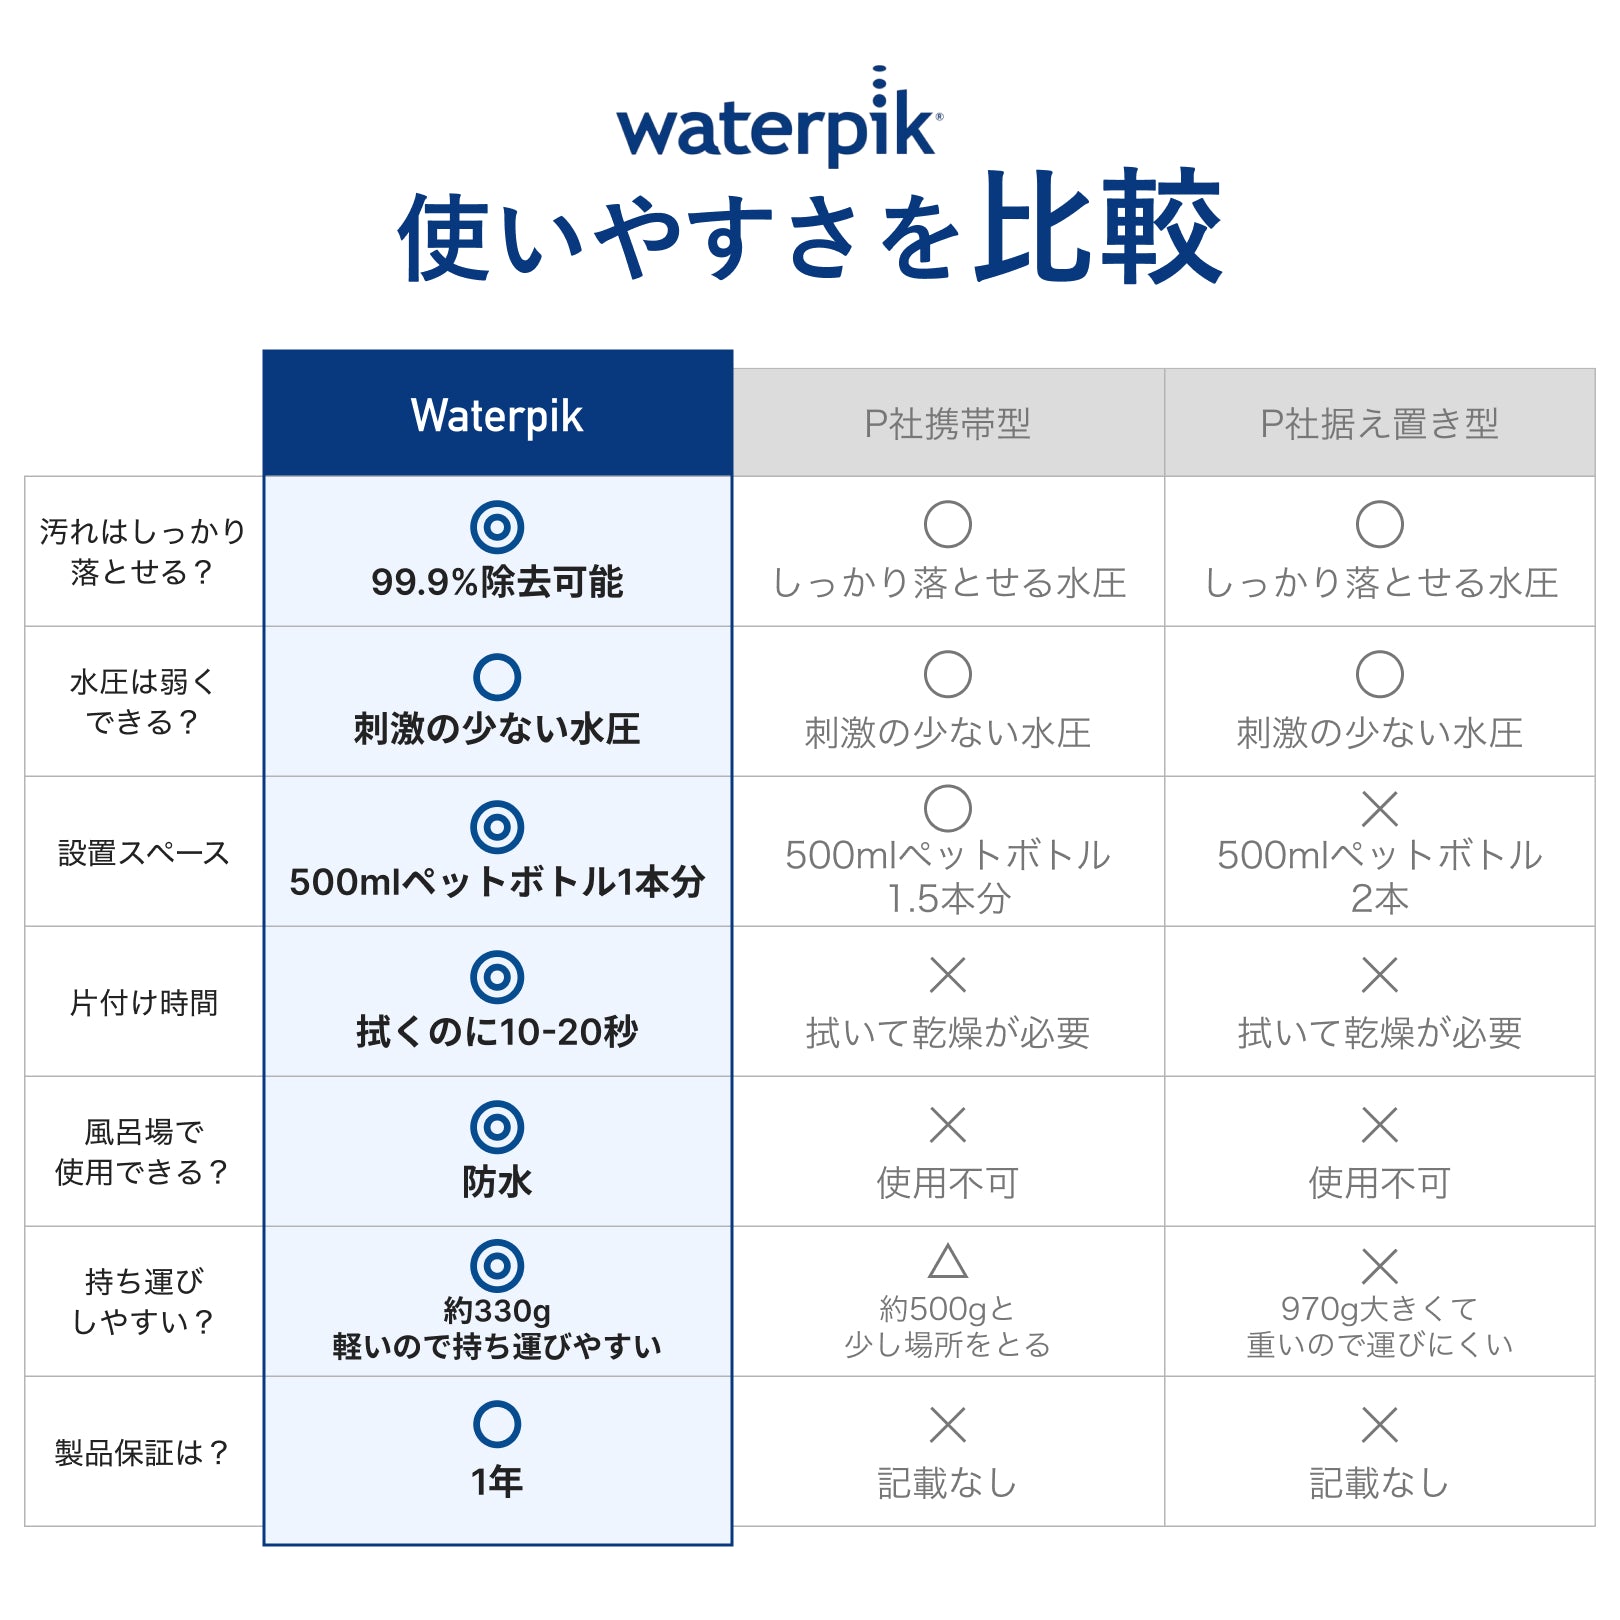 Waterpik(ウォーターピック) コードレス セレクト WF-10